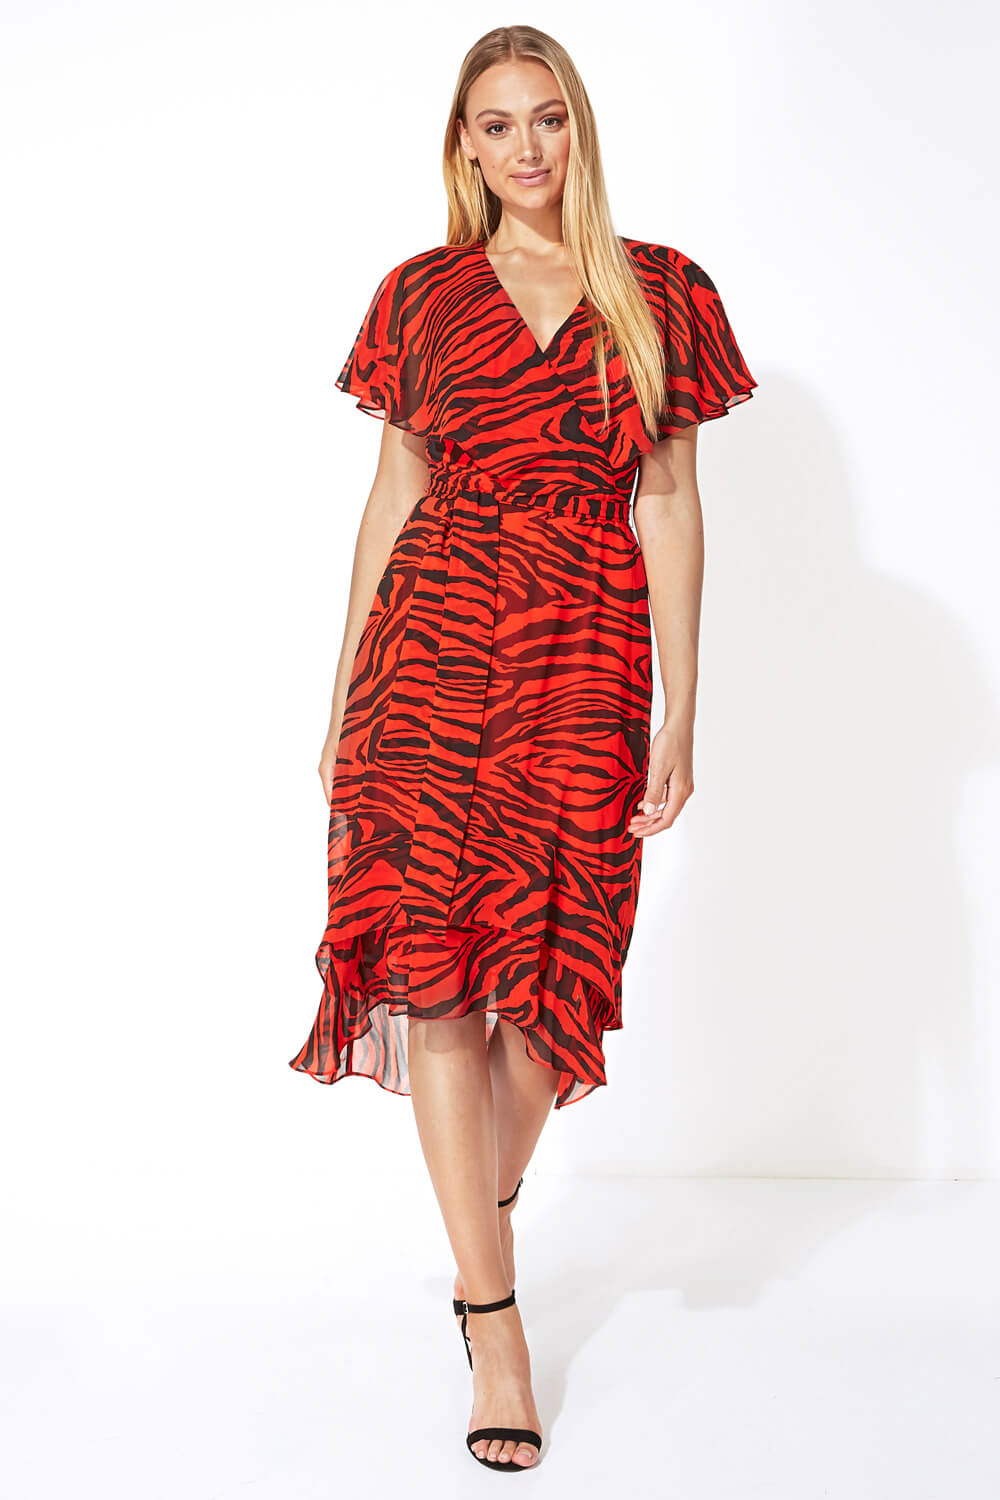 ORANGE Tiger Print Tie Waist Chiffon Midi Dress, Image 2 of 5